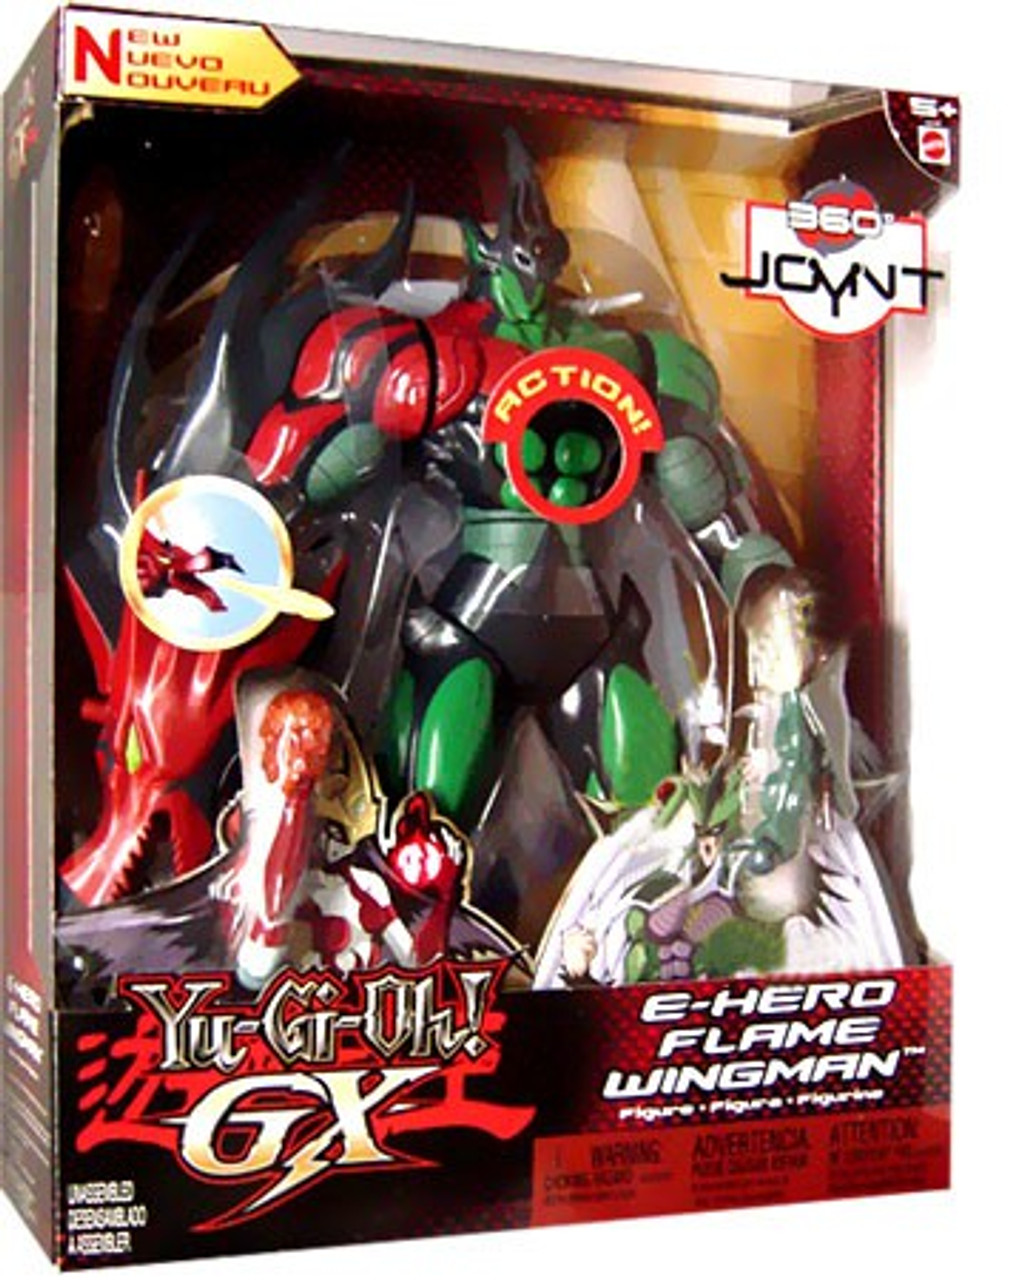 Yugioh Gx 360 Joynt Series 1 E Hero Flame Wingman 12 Action Figure Mattel Toys Toywiz - wyngman roblox